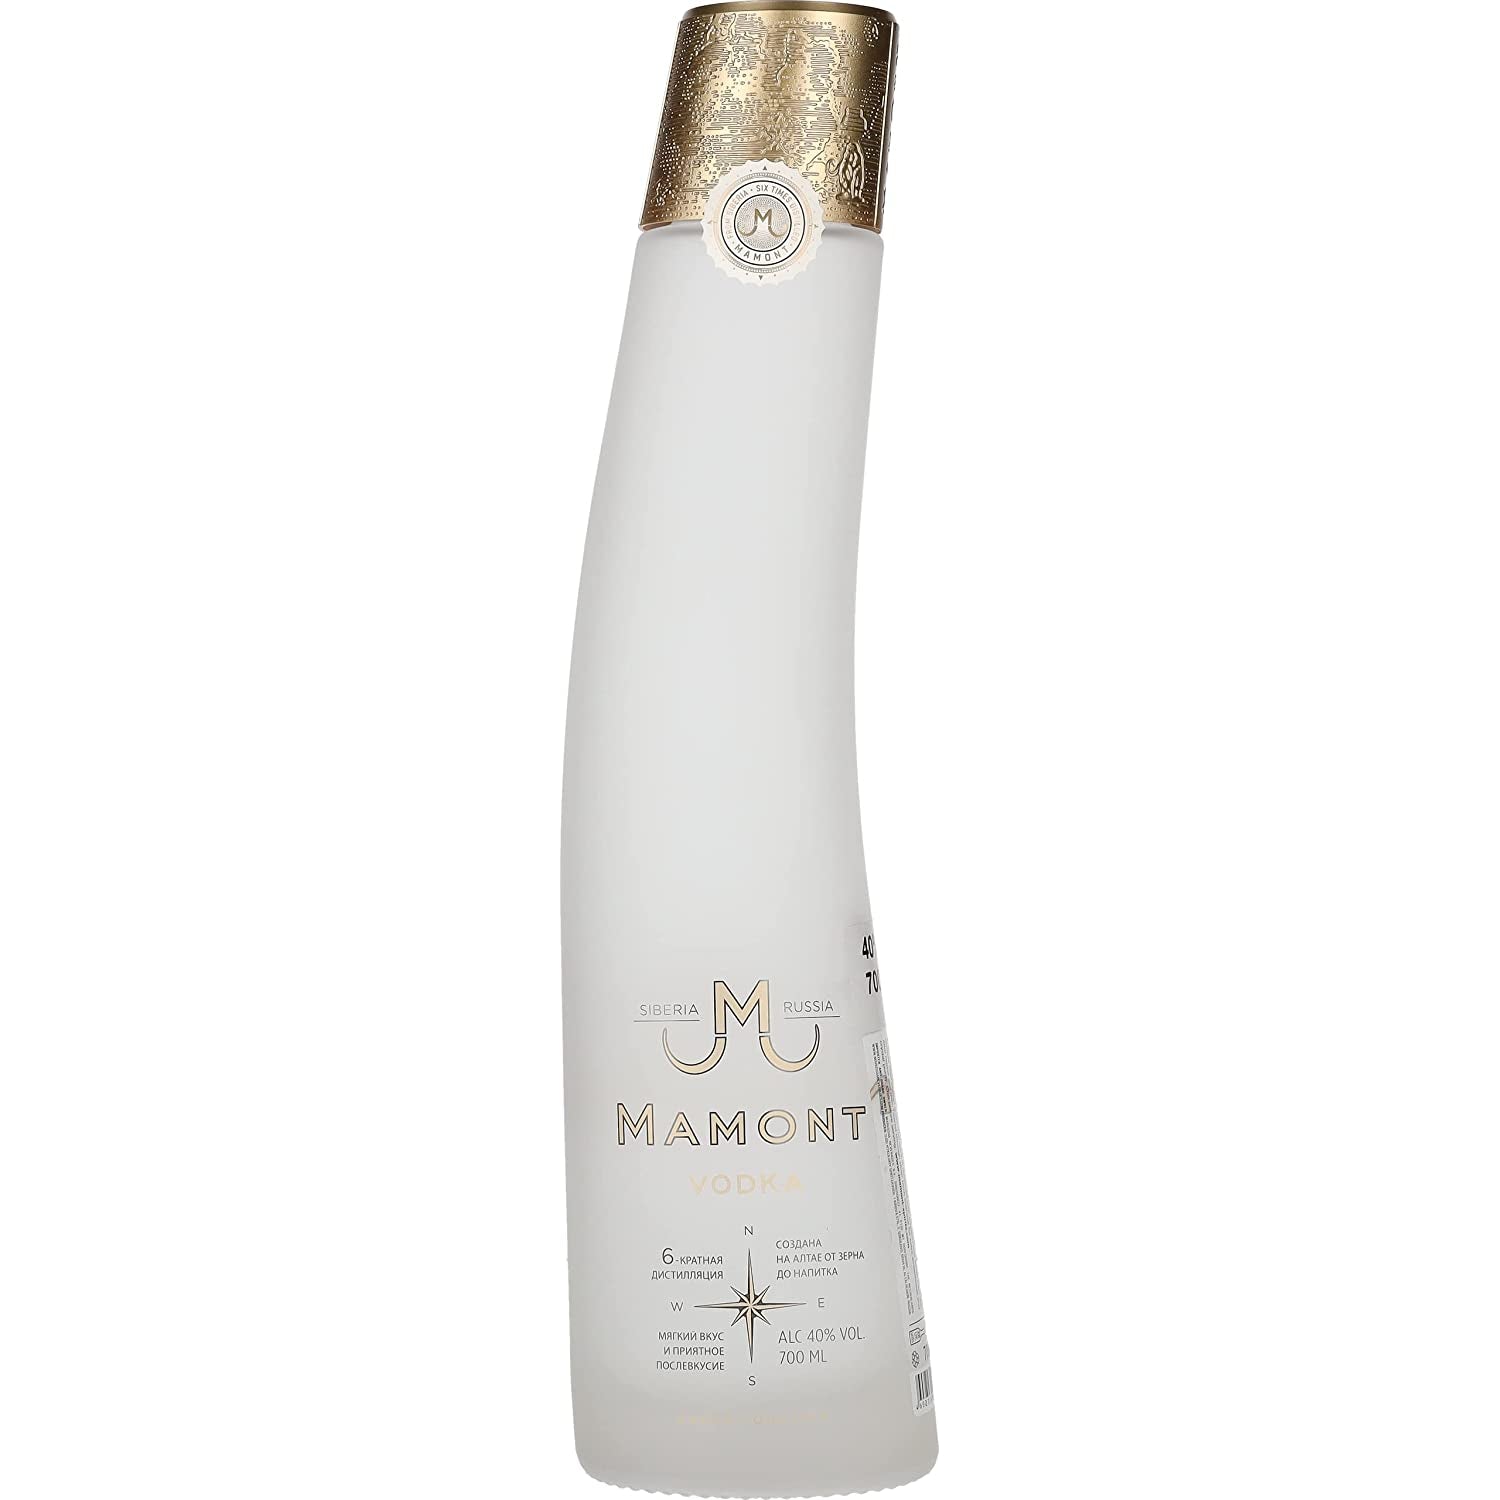 Mamont Vodka 40% Vol. 0,7l